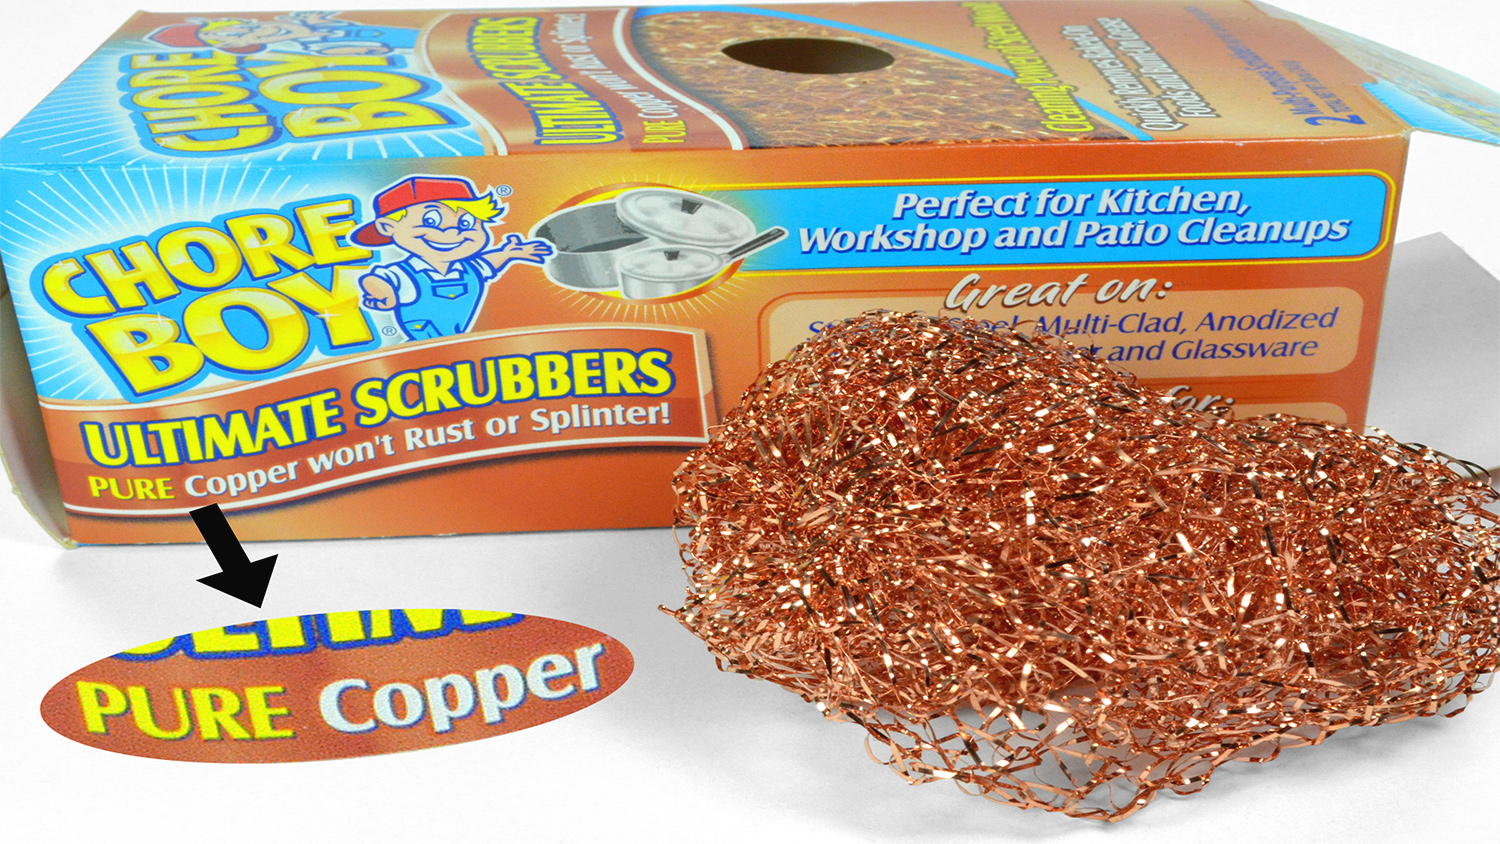 Chore Boy Pure Copper Ultimate Scrubber